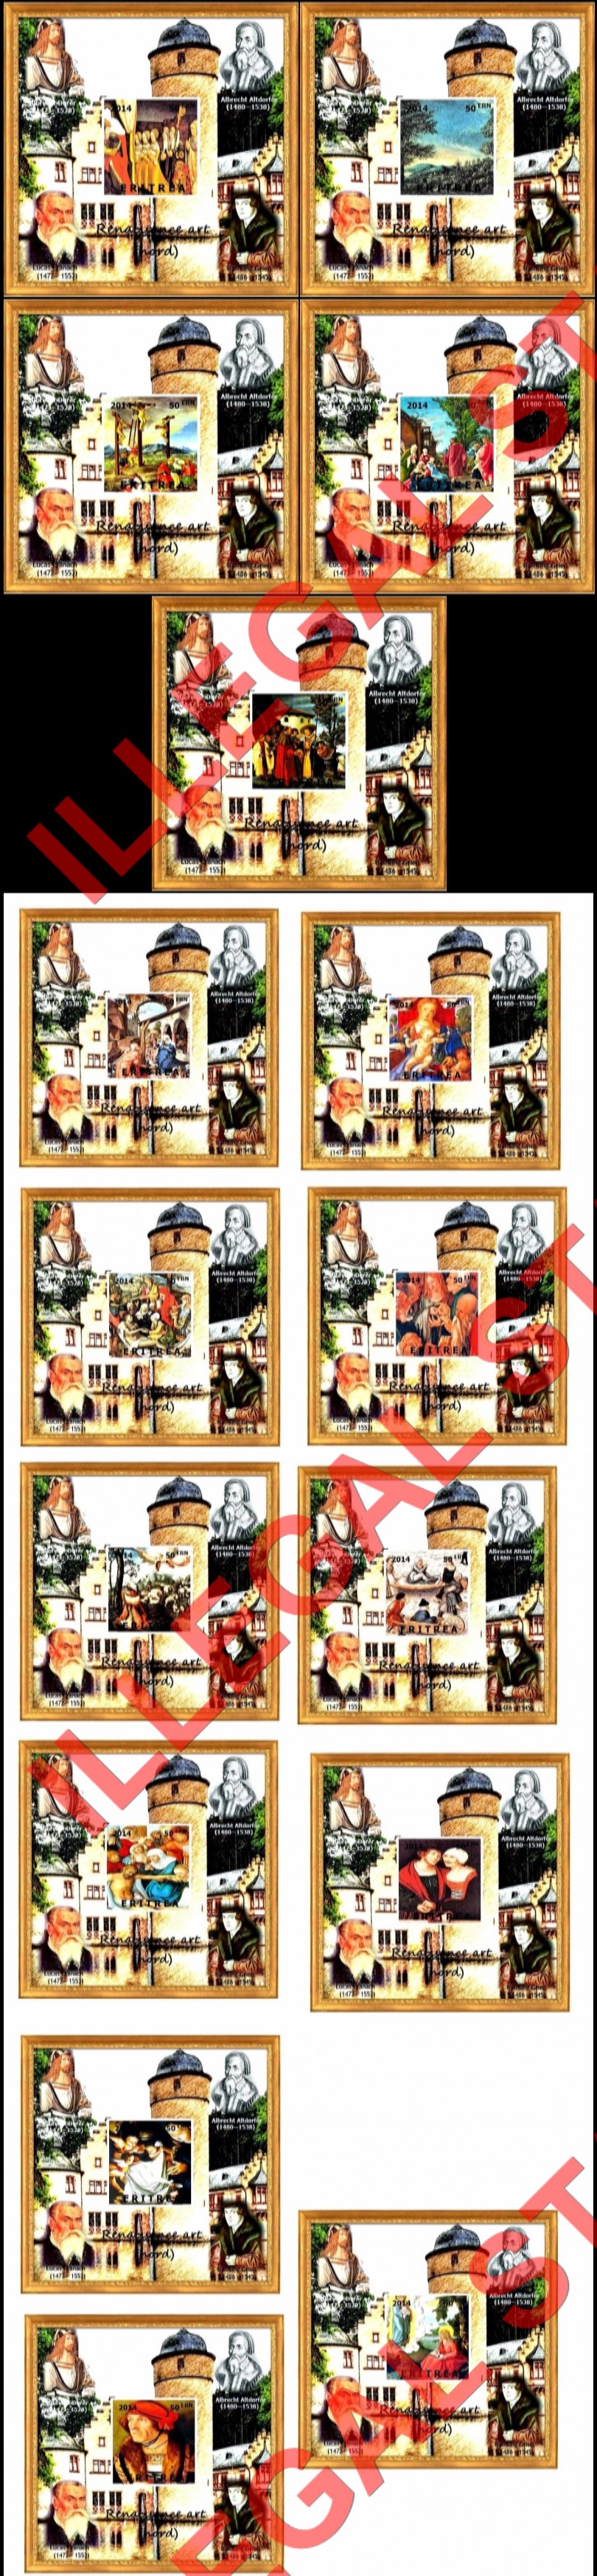 Eritrea 2014 Paintings Northern Renaissance Art Counterfeit Illegal Stamp Souvenir Sheets of 1